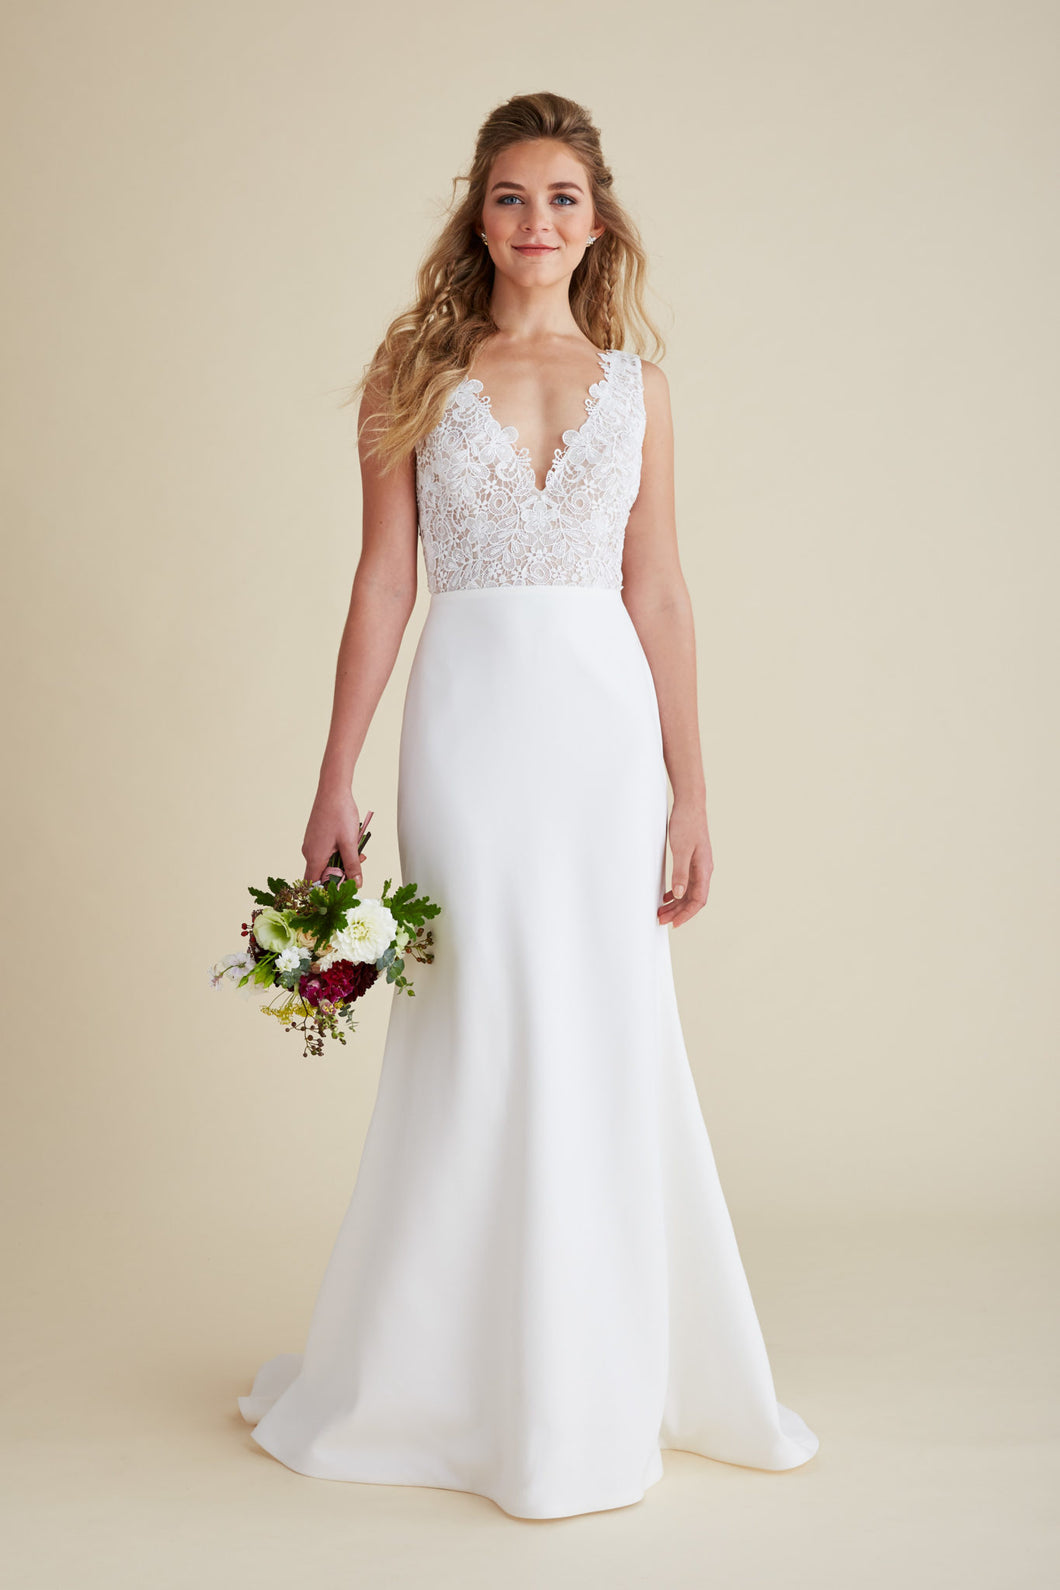 Lea Ann Belter 'Splendor' size 00 used wedding dress front view on model